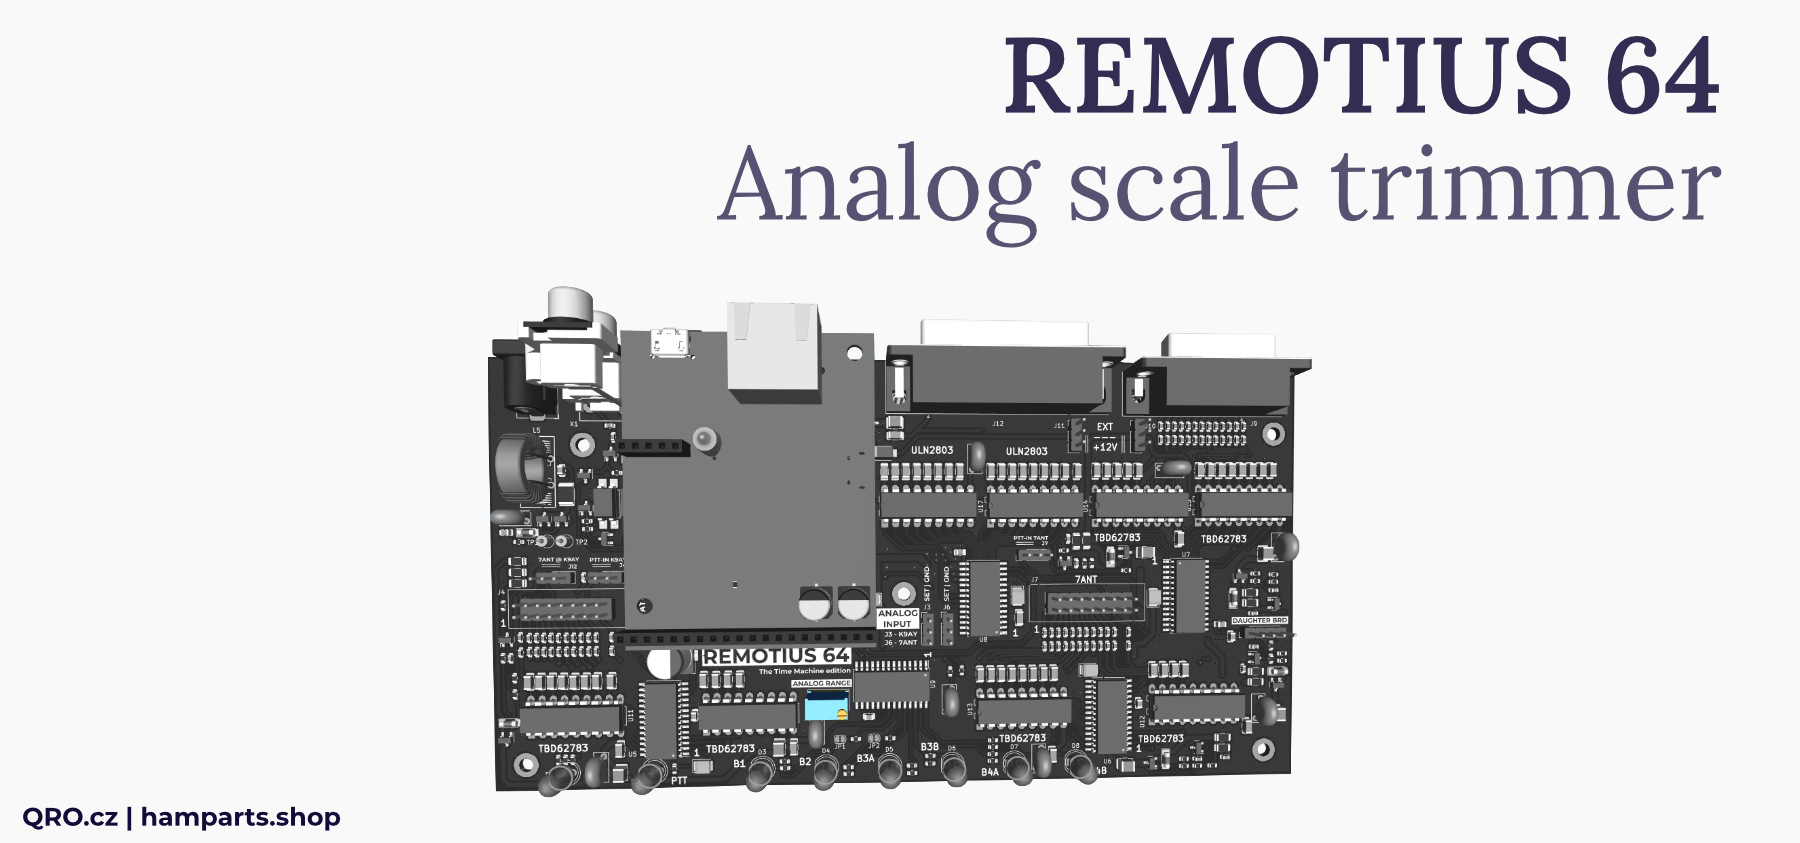 remotius analog input trimmer setting qro.cz hamparts.shop